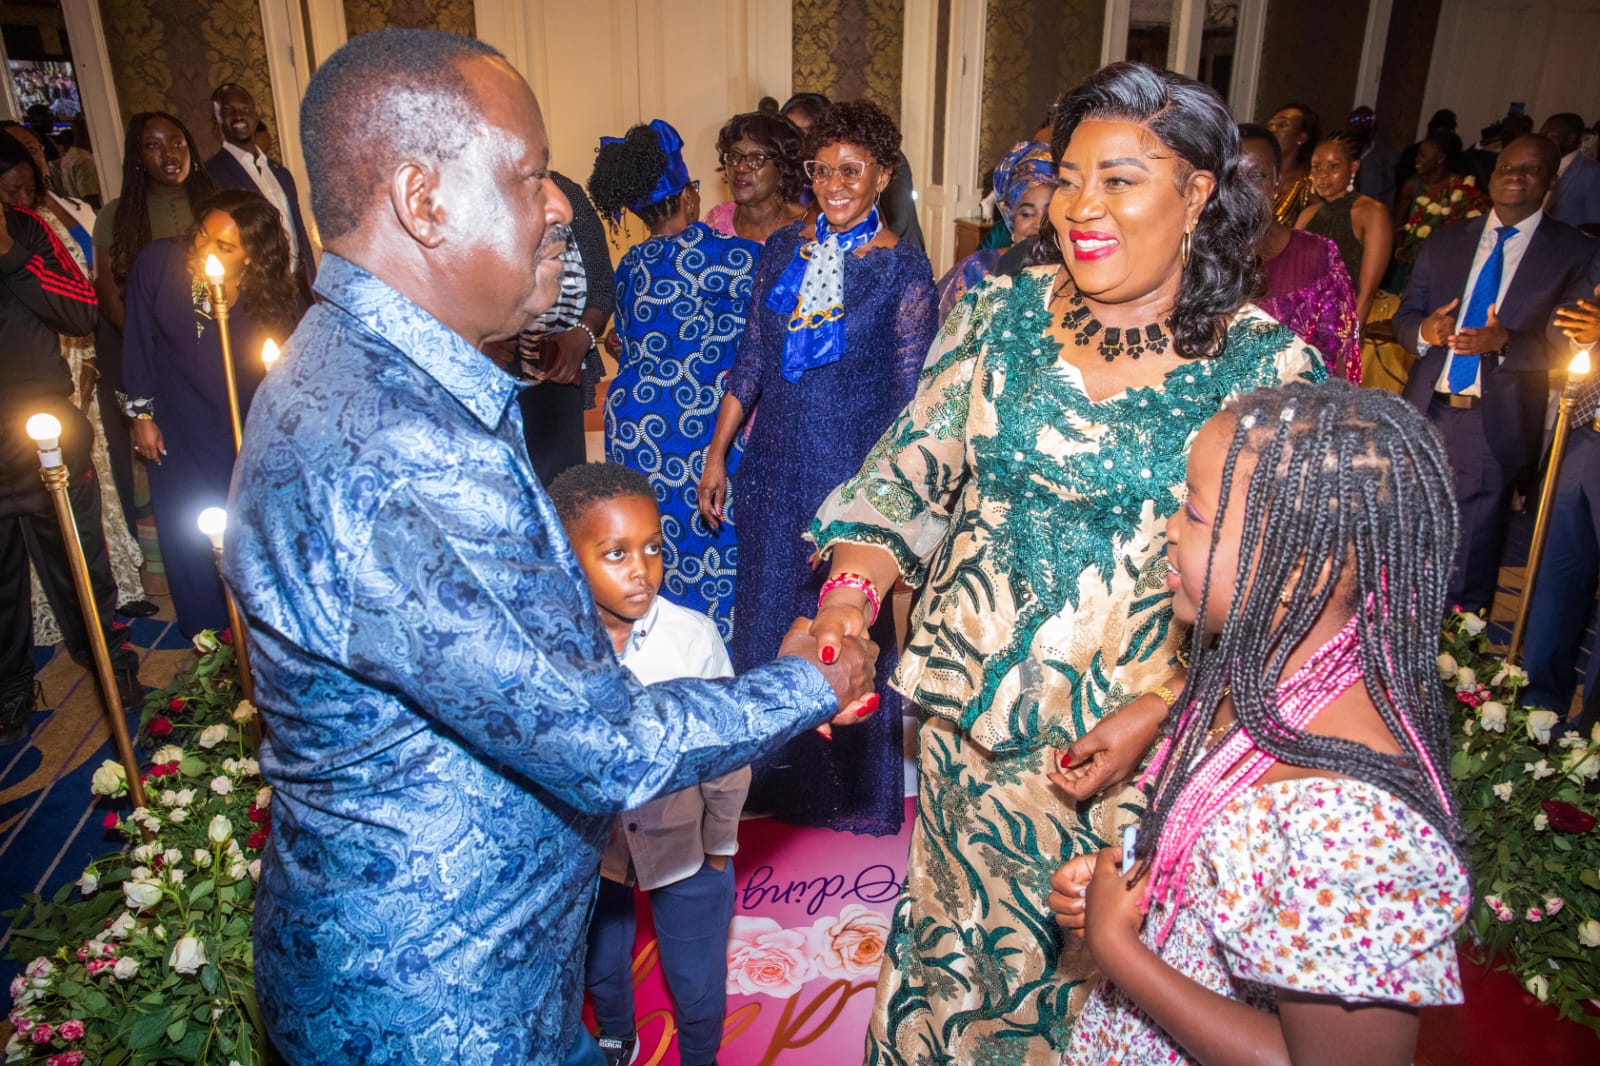 Raila Odinga celebrated his wife Ida Odinga